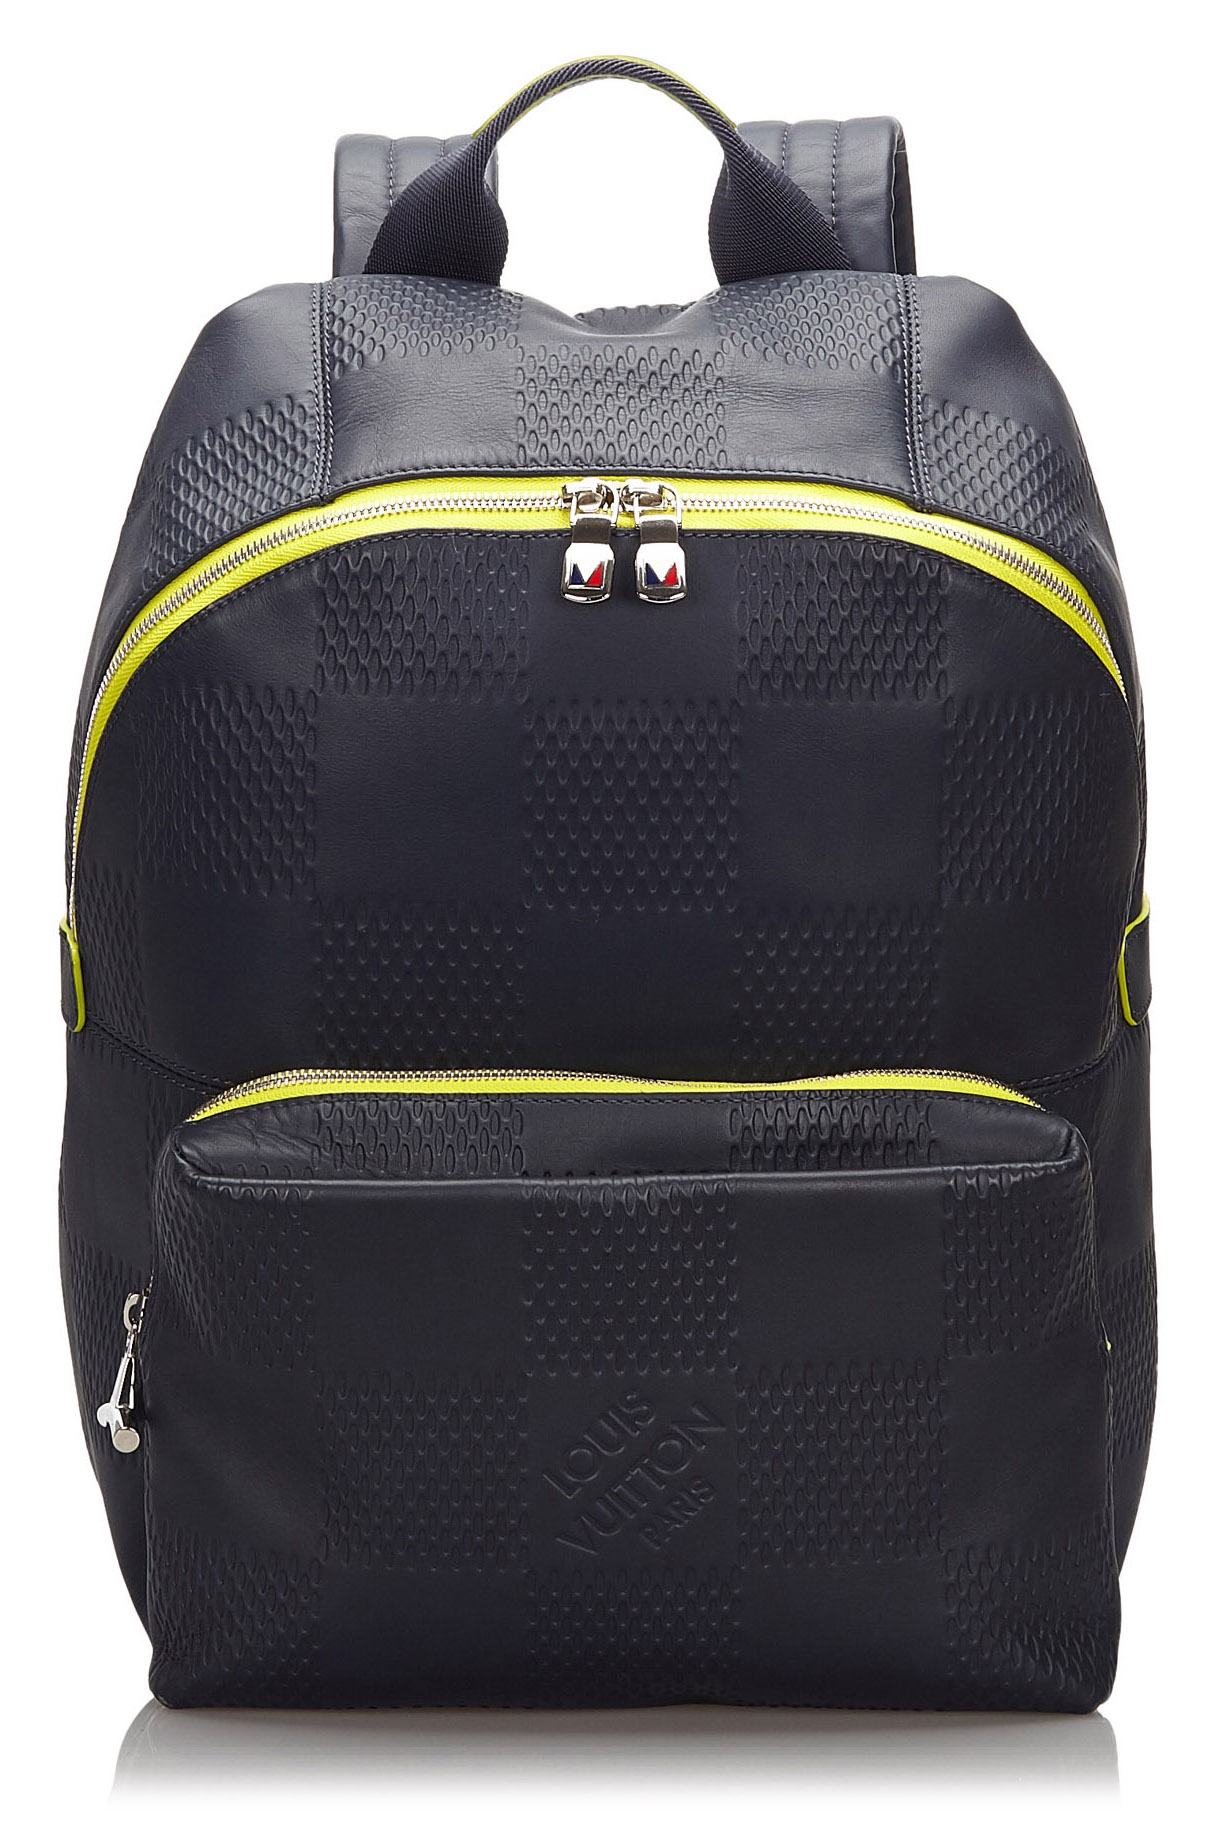 Louis Vuitton 2017-18FW Backpacks